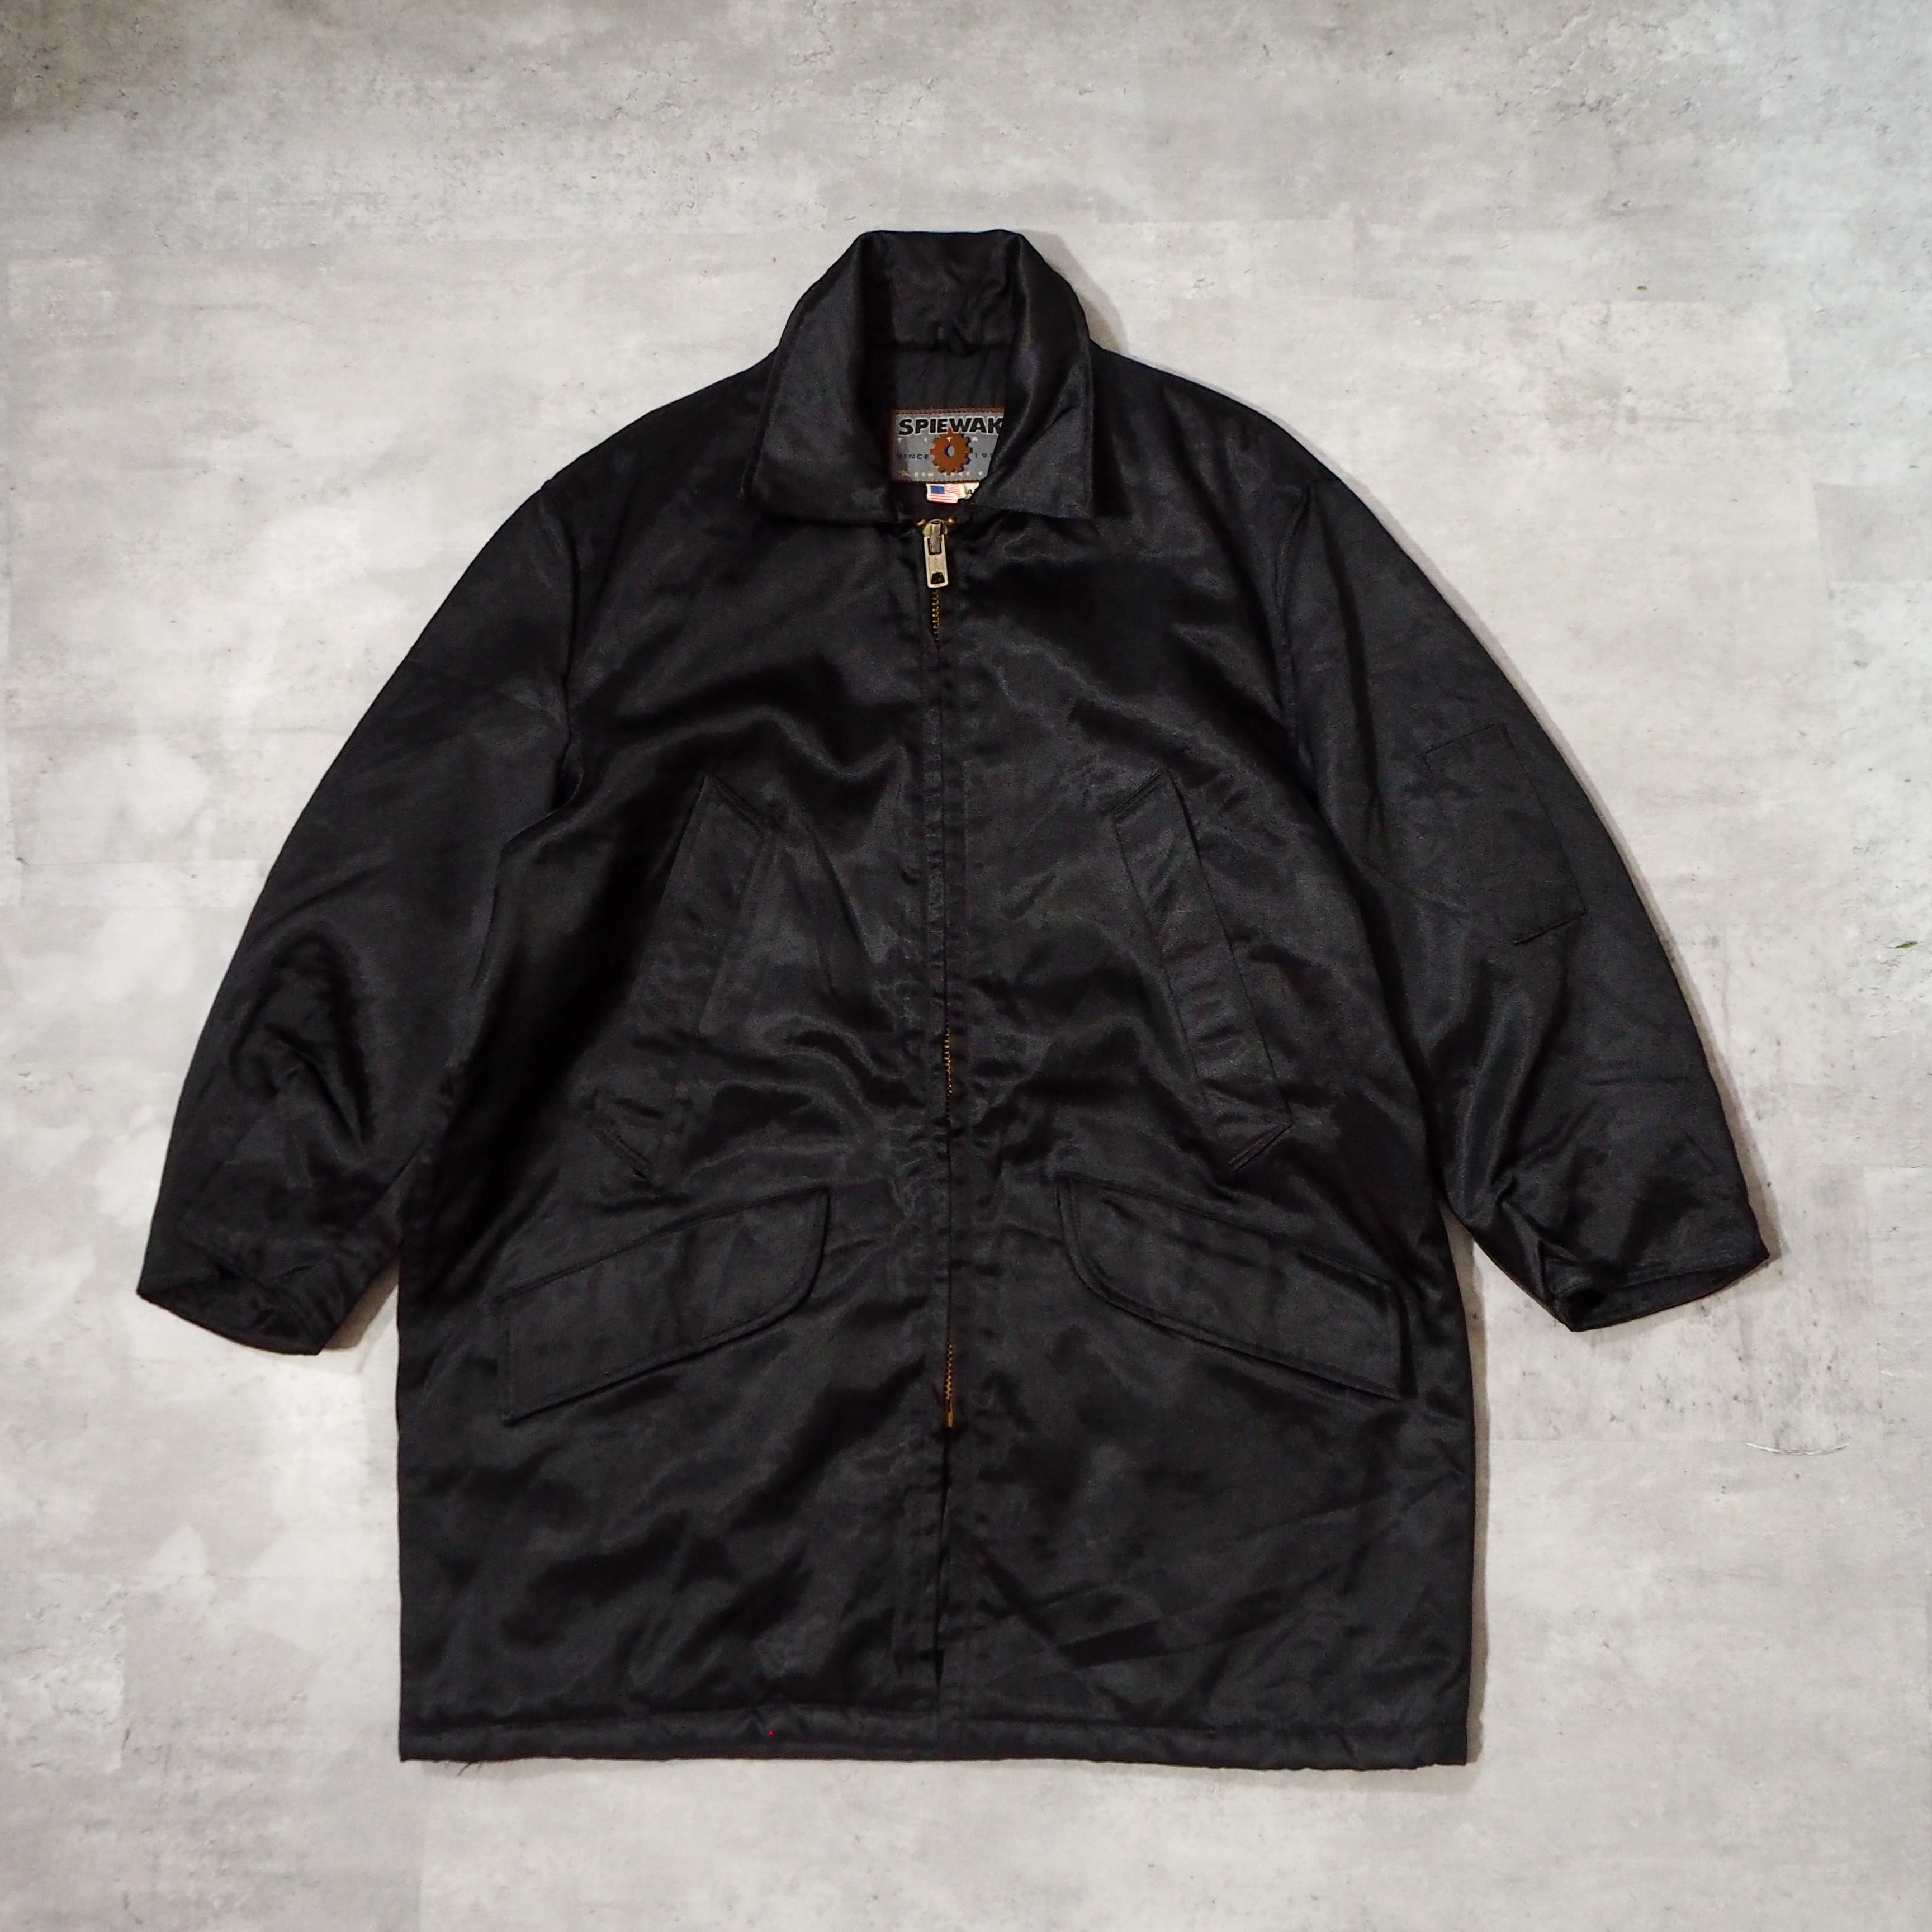 80s-90s “Spiewak” titan cloth short coat made in usa 80年代 90年代